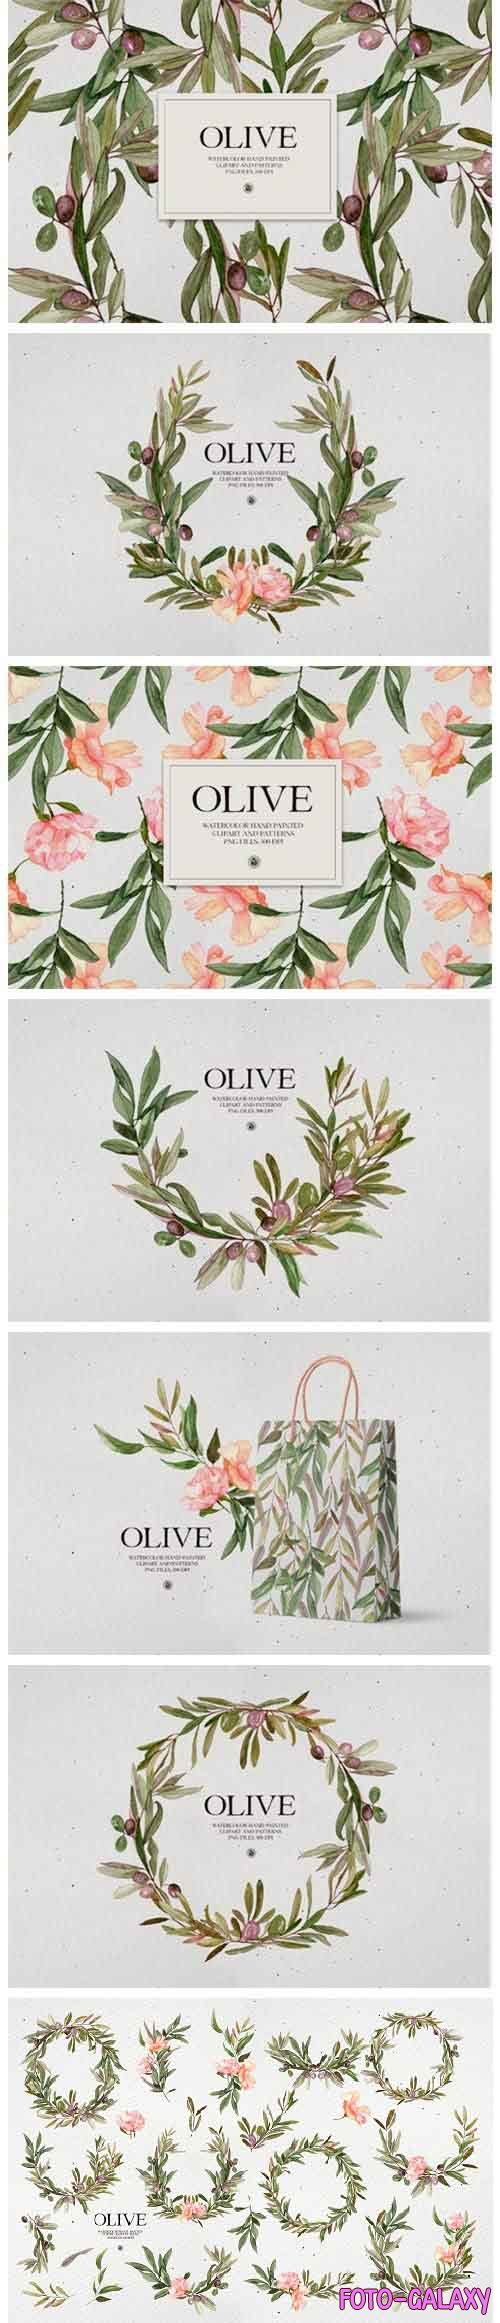 Watercolor Olive - frames & patterns - 5766521